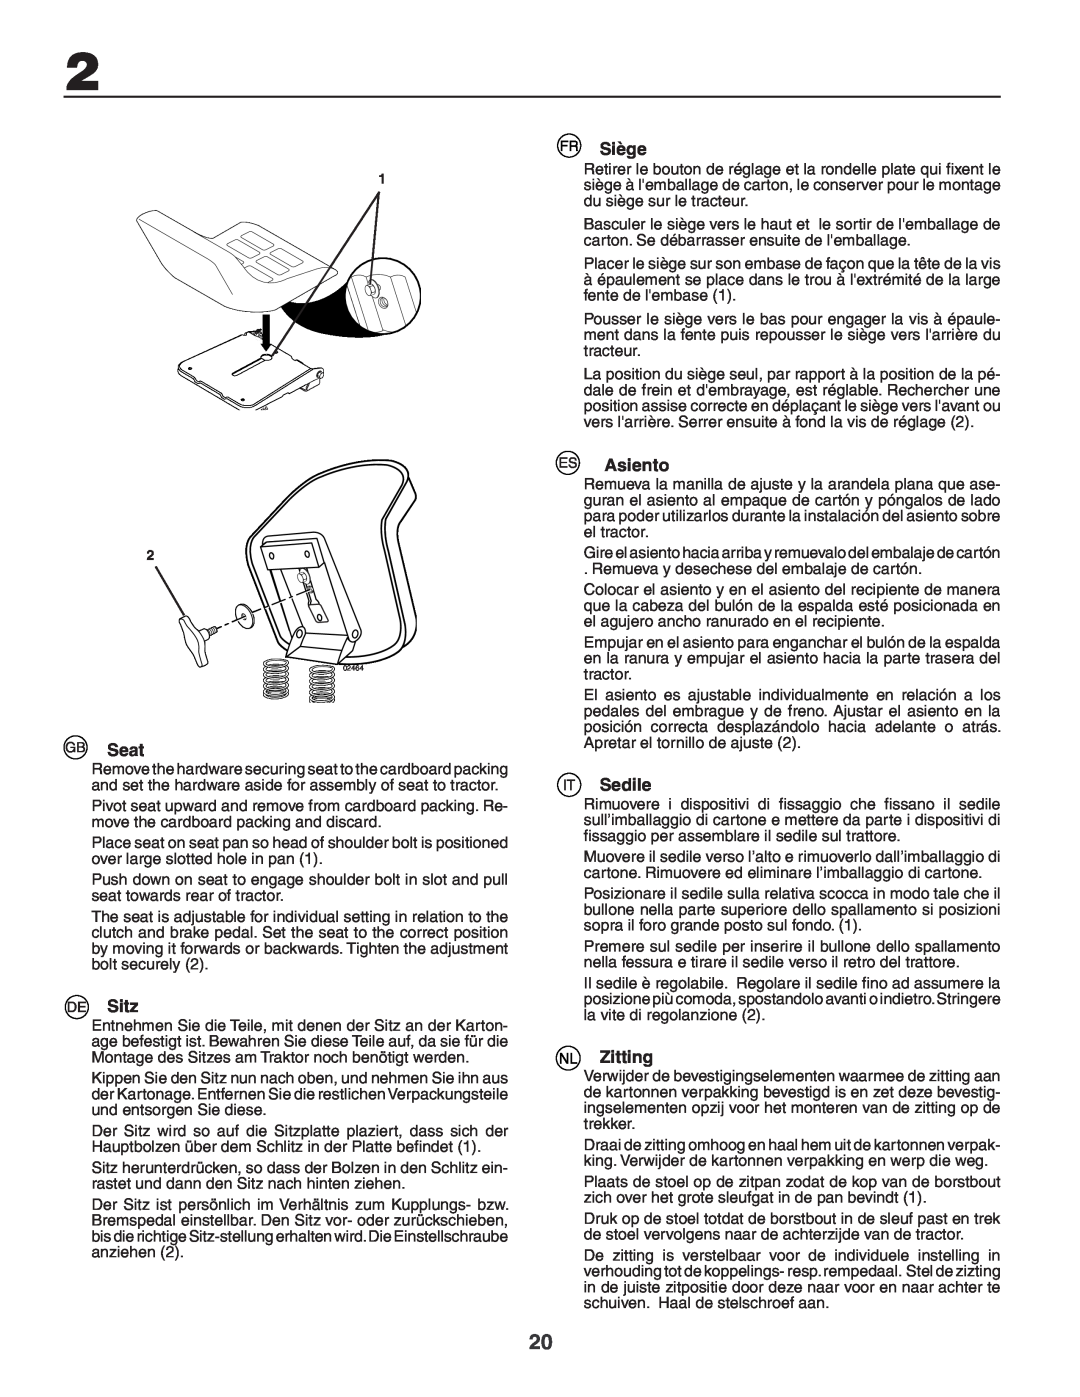 Husqvarna YTH180XP instruction manual Seat, Sitz, Siège, Asiento, Sedile, Zitting 